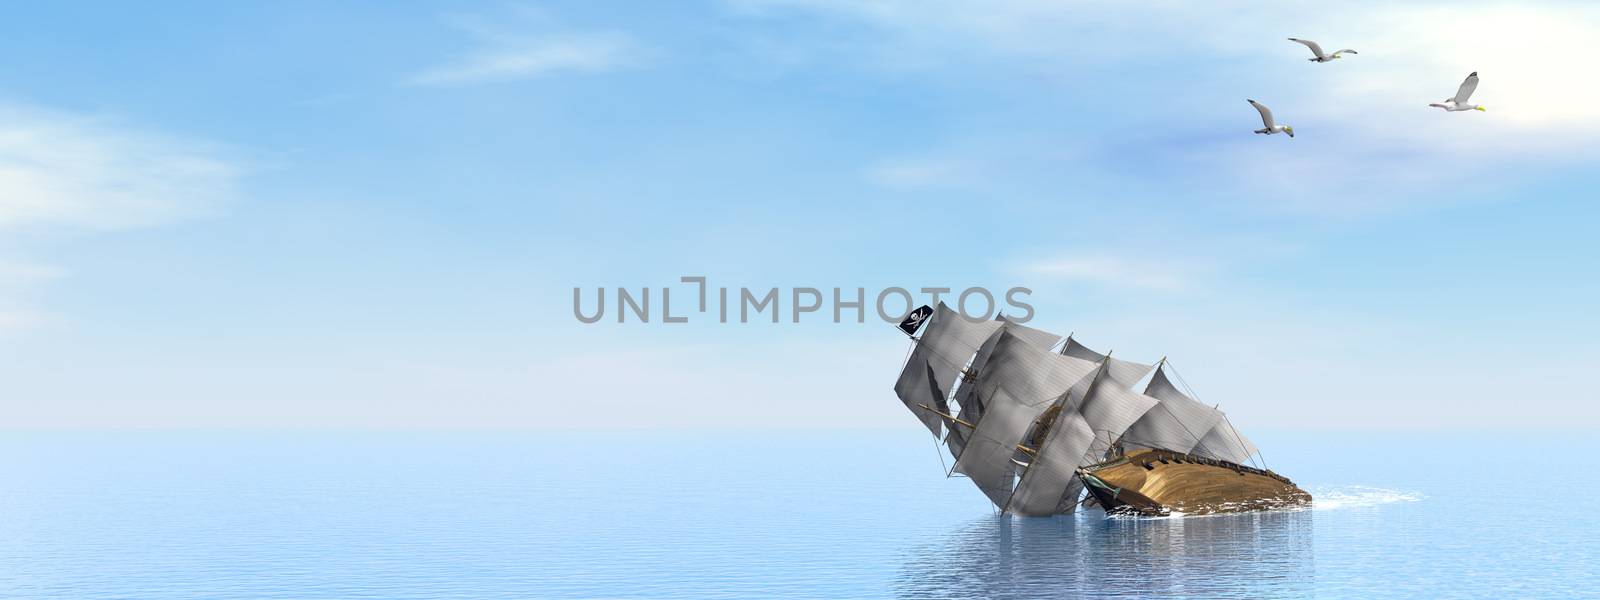 Pirate Ship sinking - 3D render by Elenaphotos21